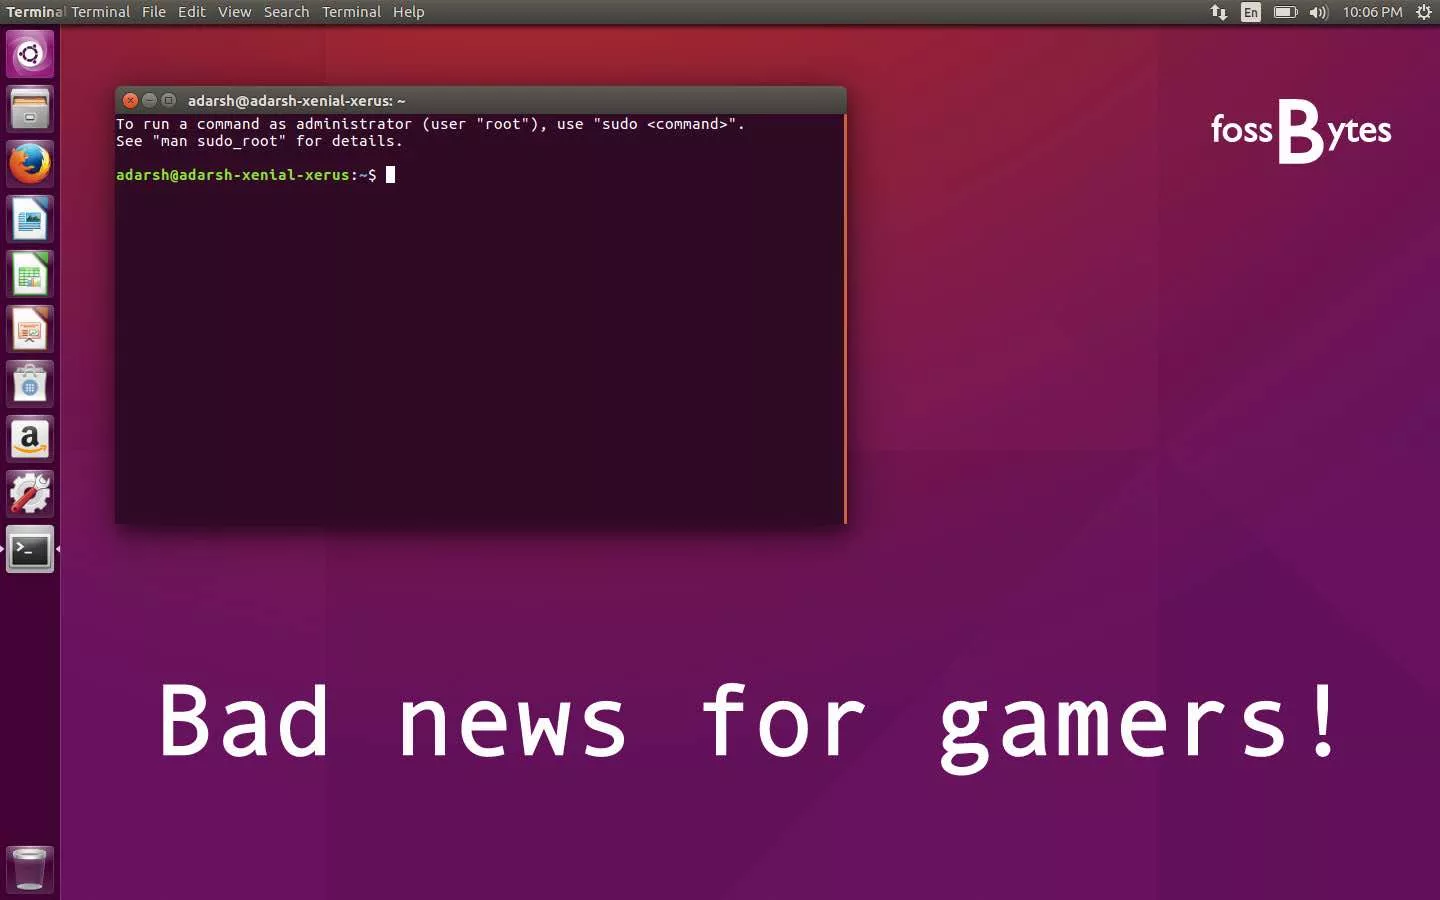 install latest nvidia drivers gpu on ubuntu 16.04